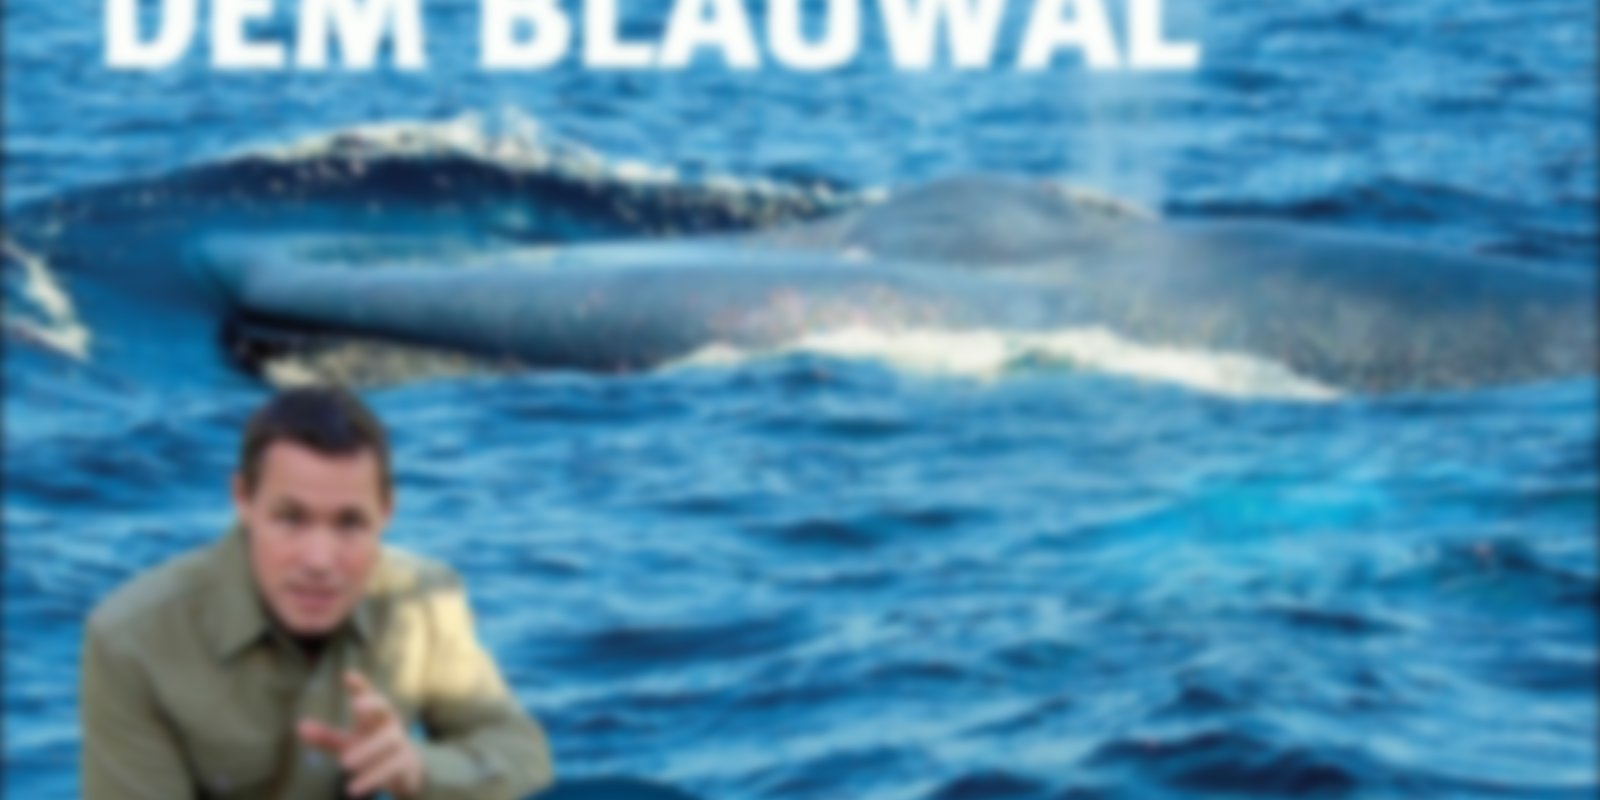 Discovery Channel HD - Unterwegs mit dem Blauwal